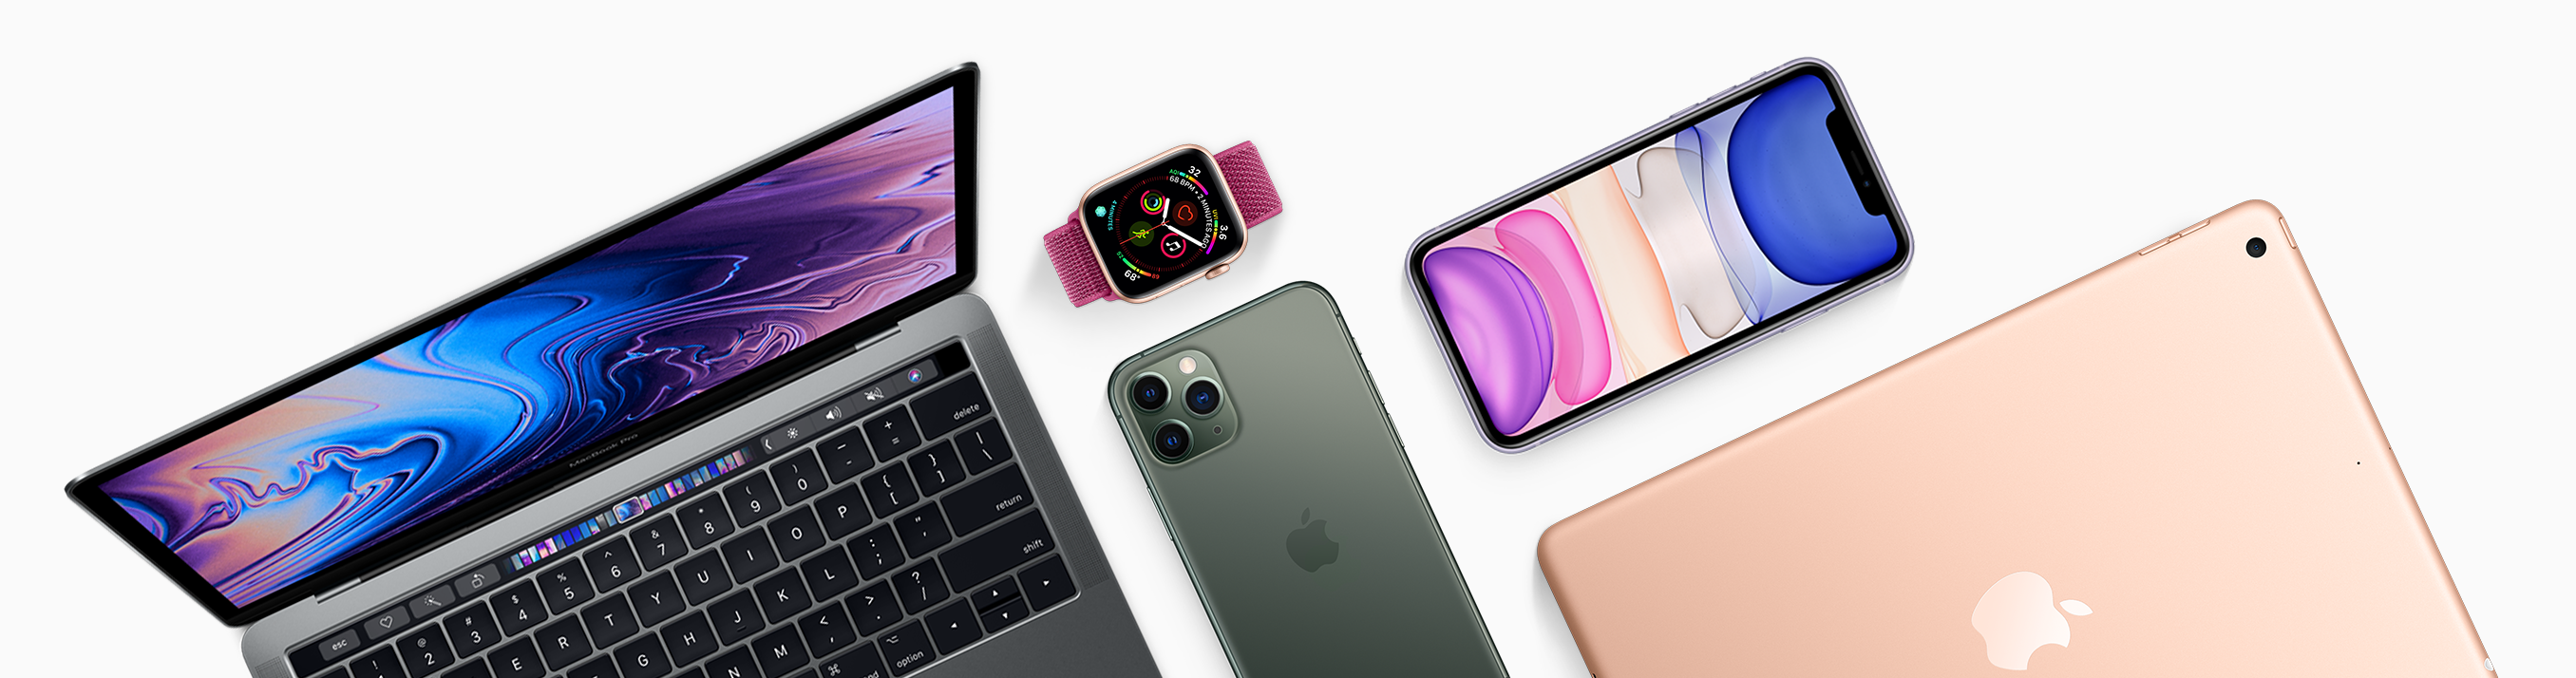 MacBook, Apple Watch, iPhone, iPhone, iPad